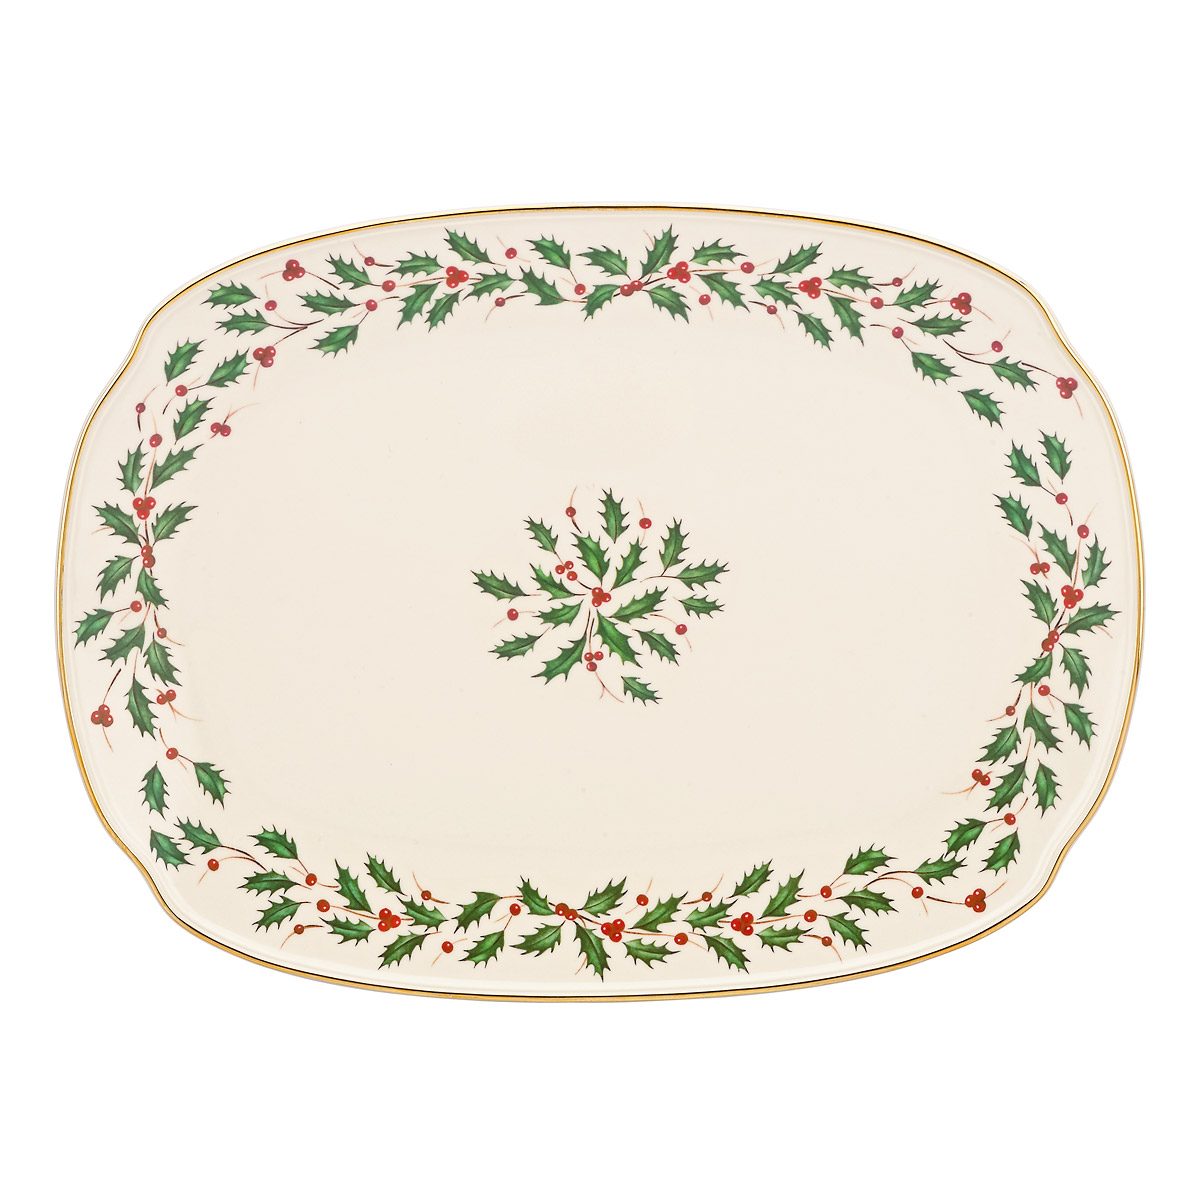 Lenox China Holiday Oblong Platter